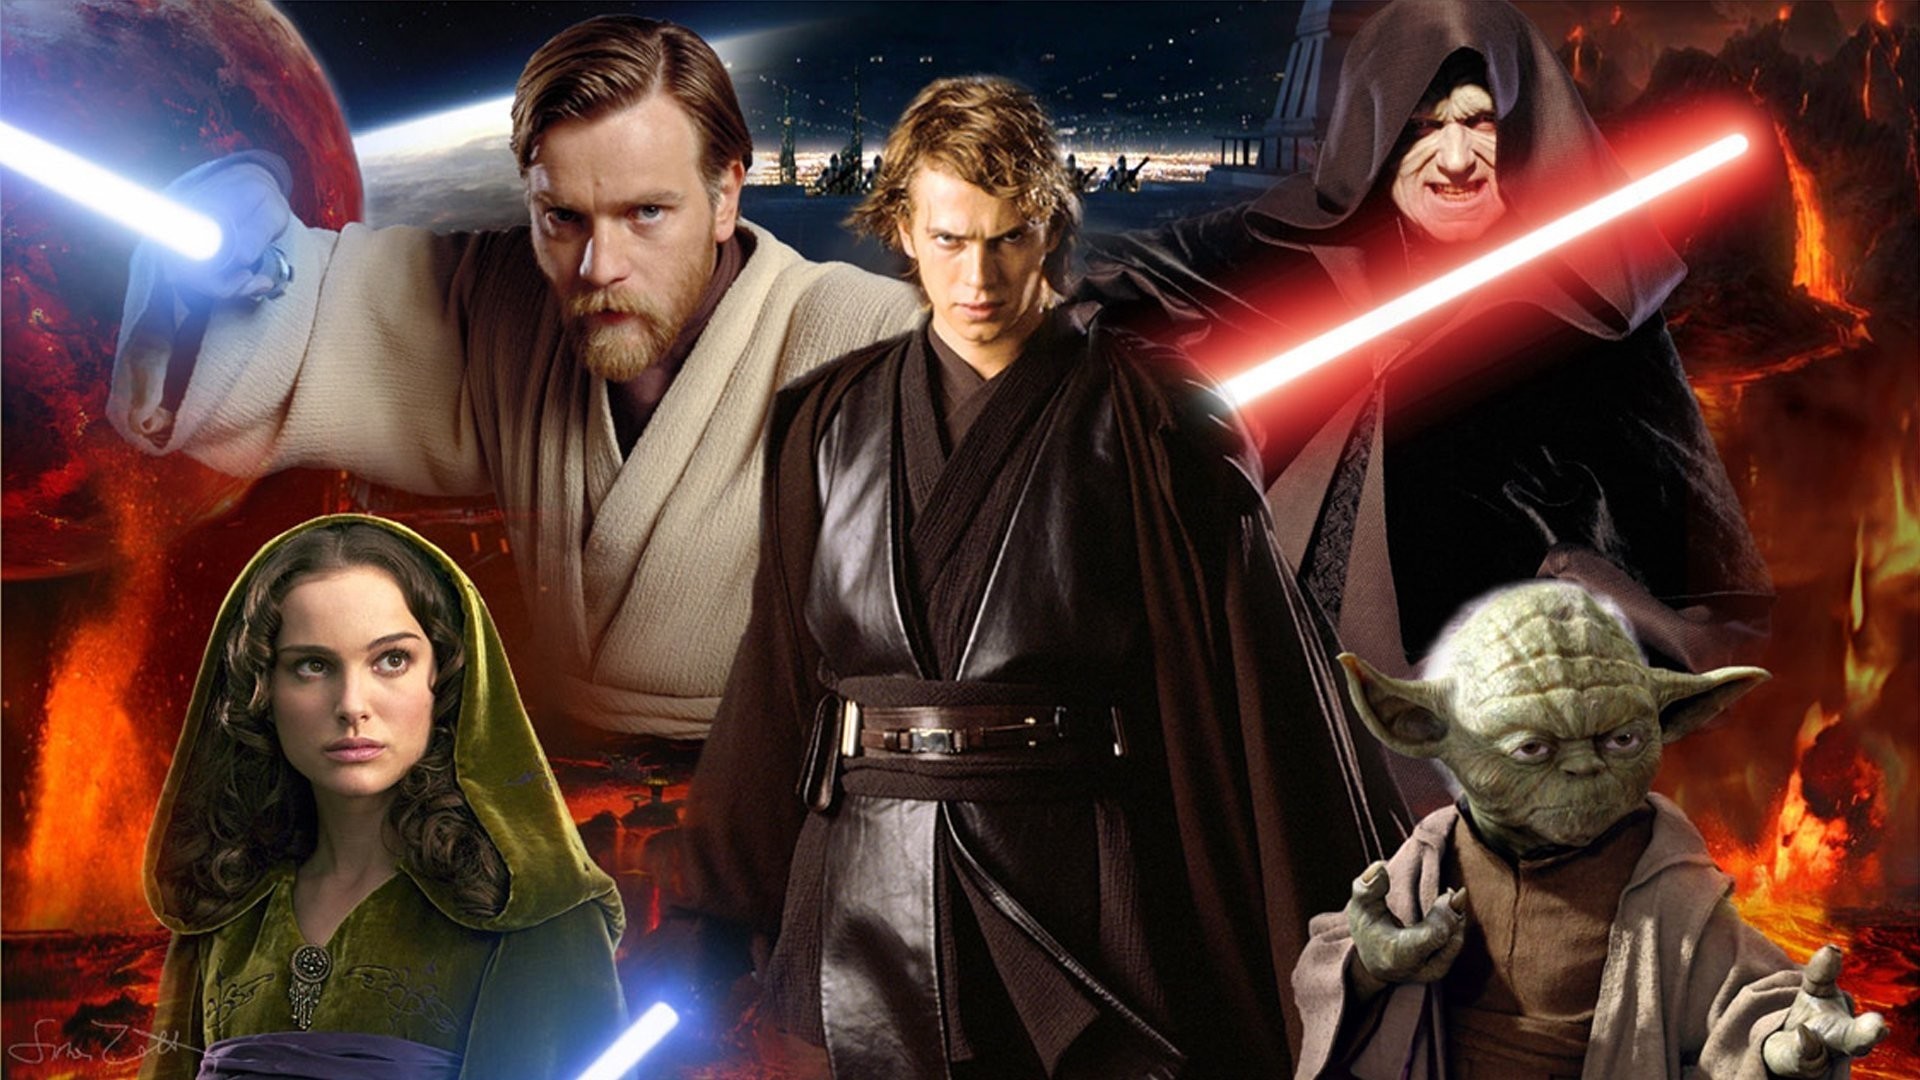 1920x1080 Movie - Star Wars Episode III: Revenge of the Sith Darth sidious Yoda Anakin  Skywalker